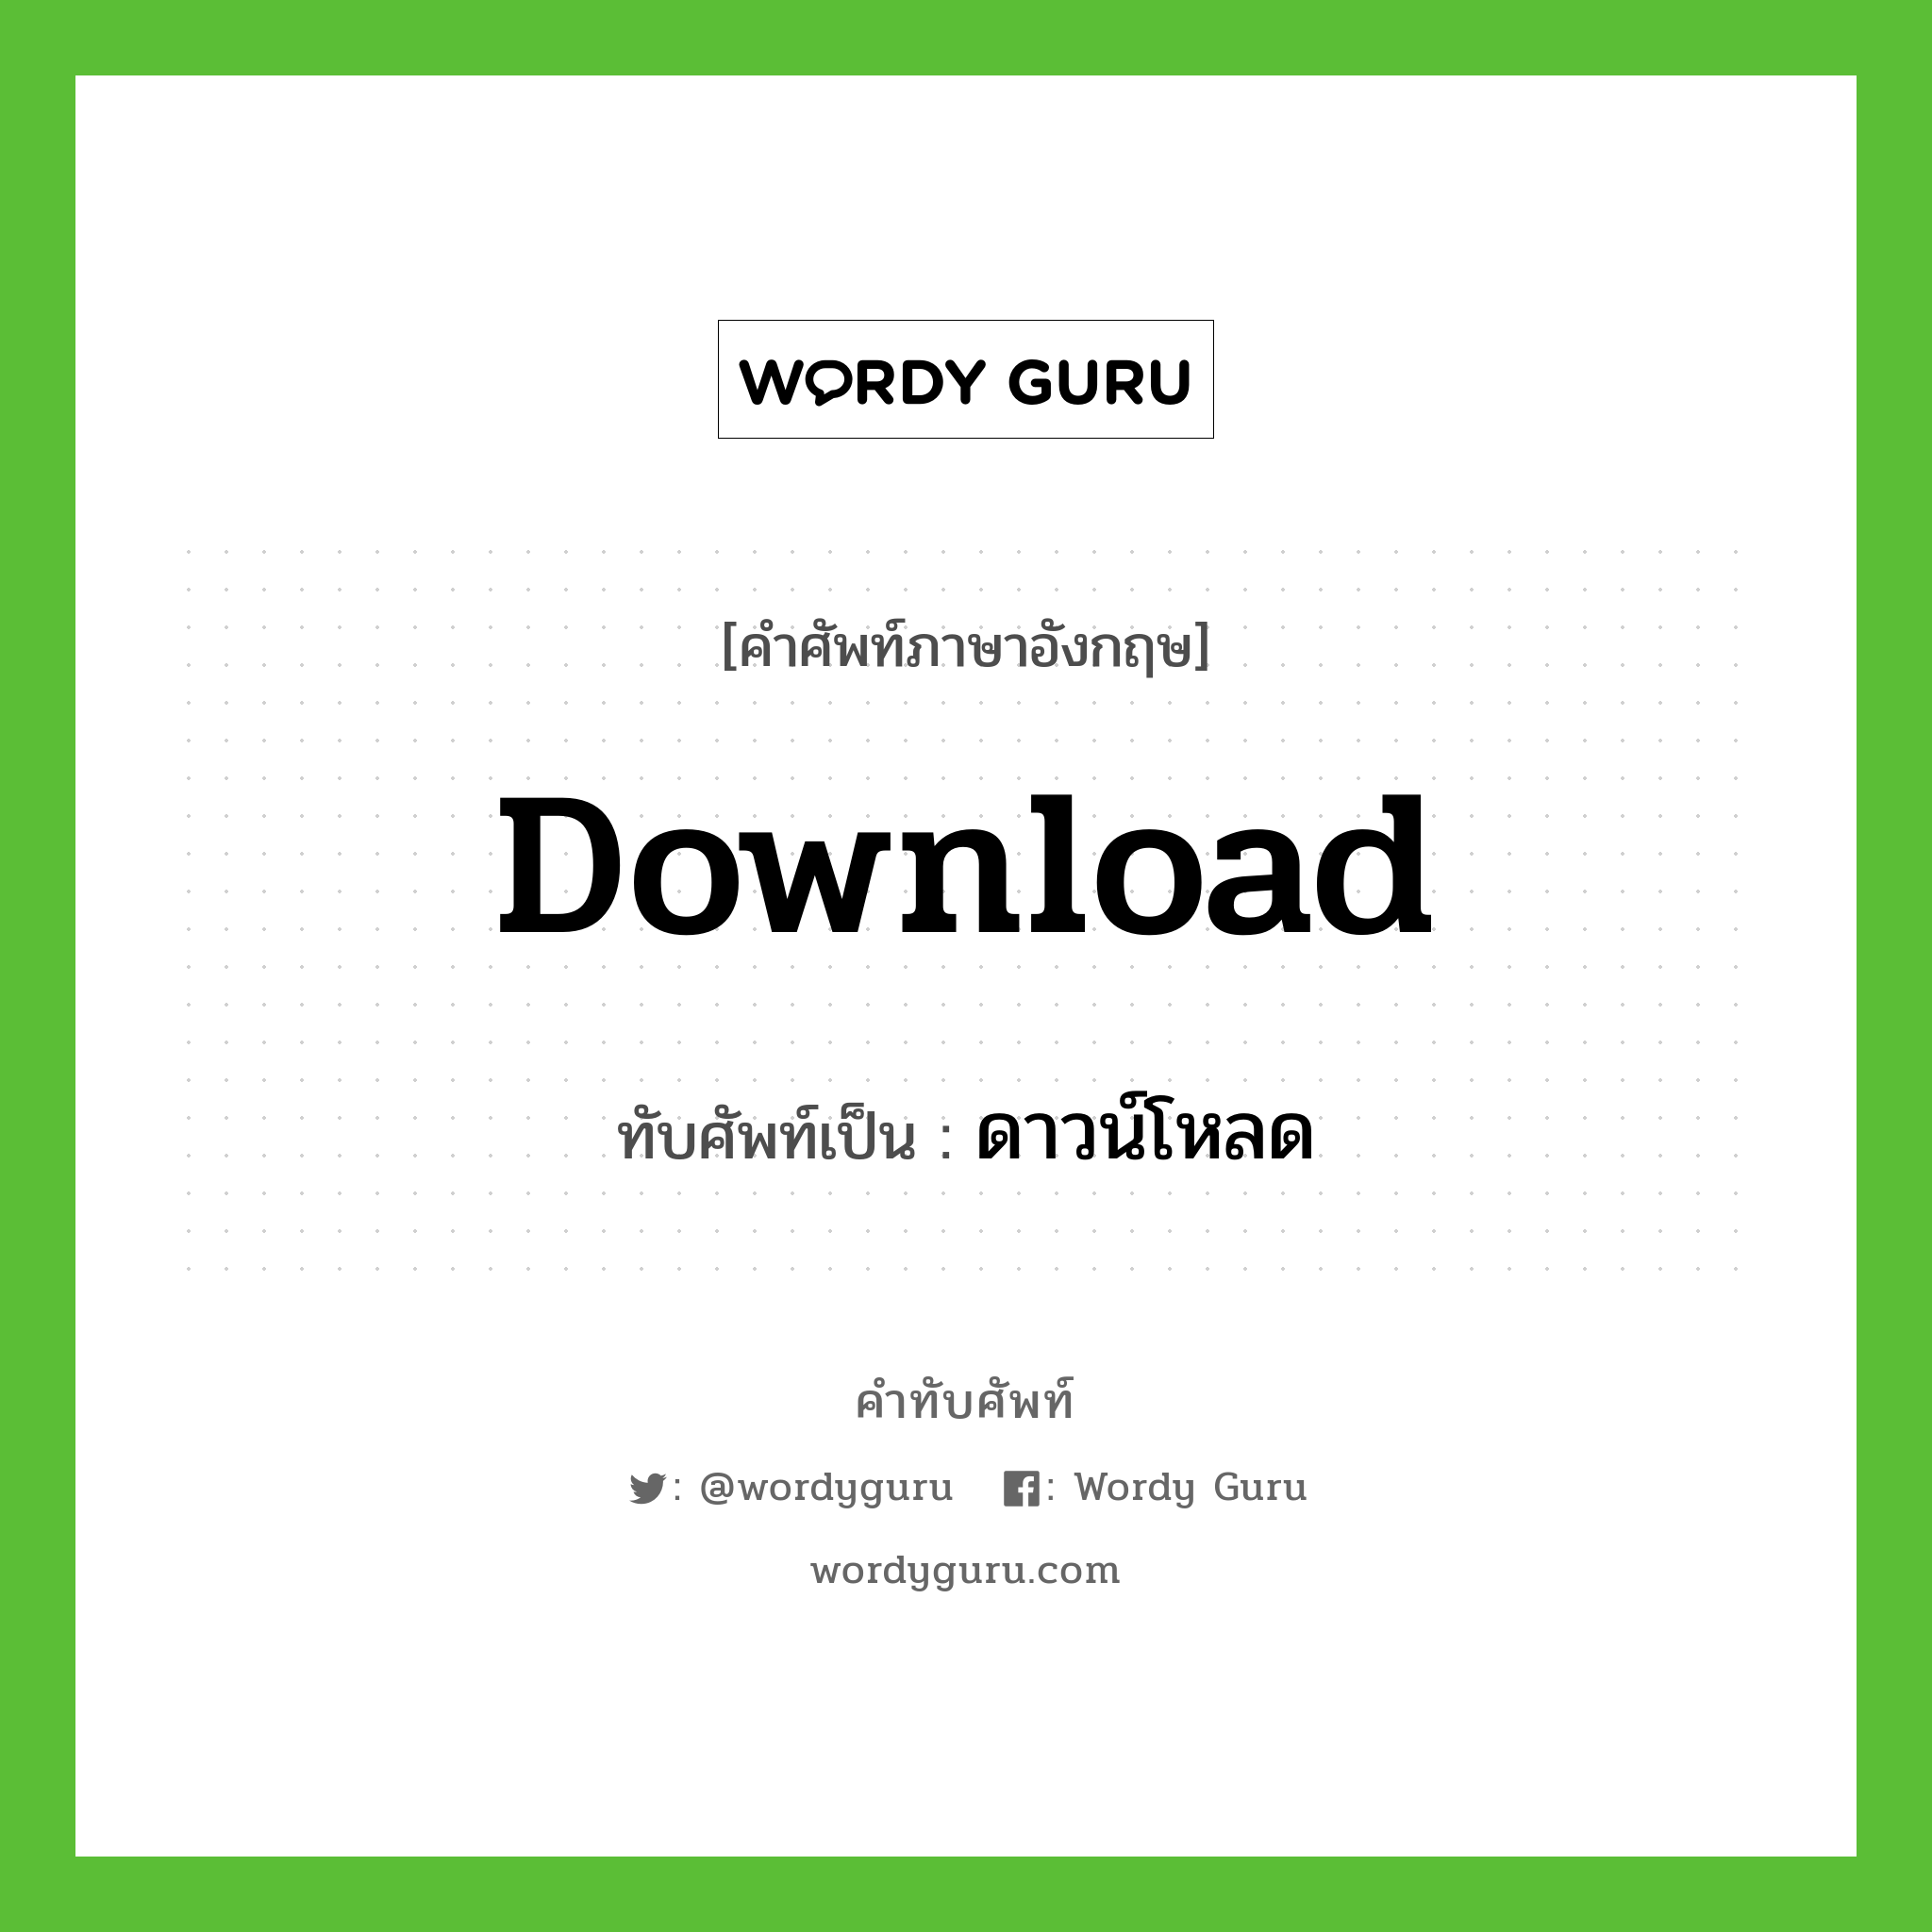 download เขียนเป็นคำไทยว่าอะไร?, คำศัพท์ภาษาอังกฤษ download ทับศัพท์เป็น ดาวน์โหลด